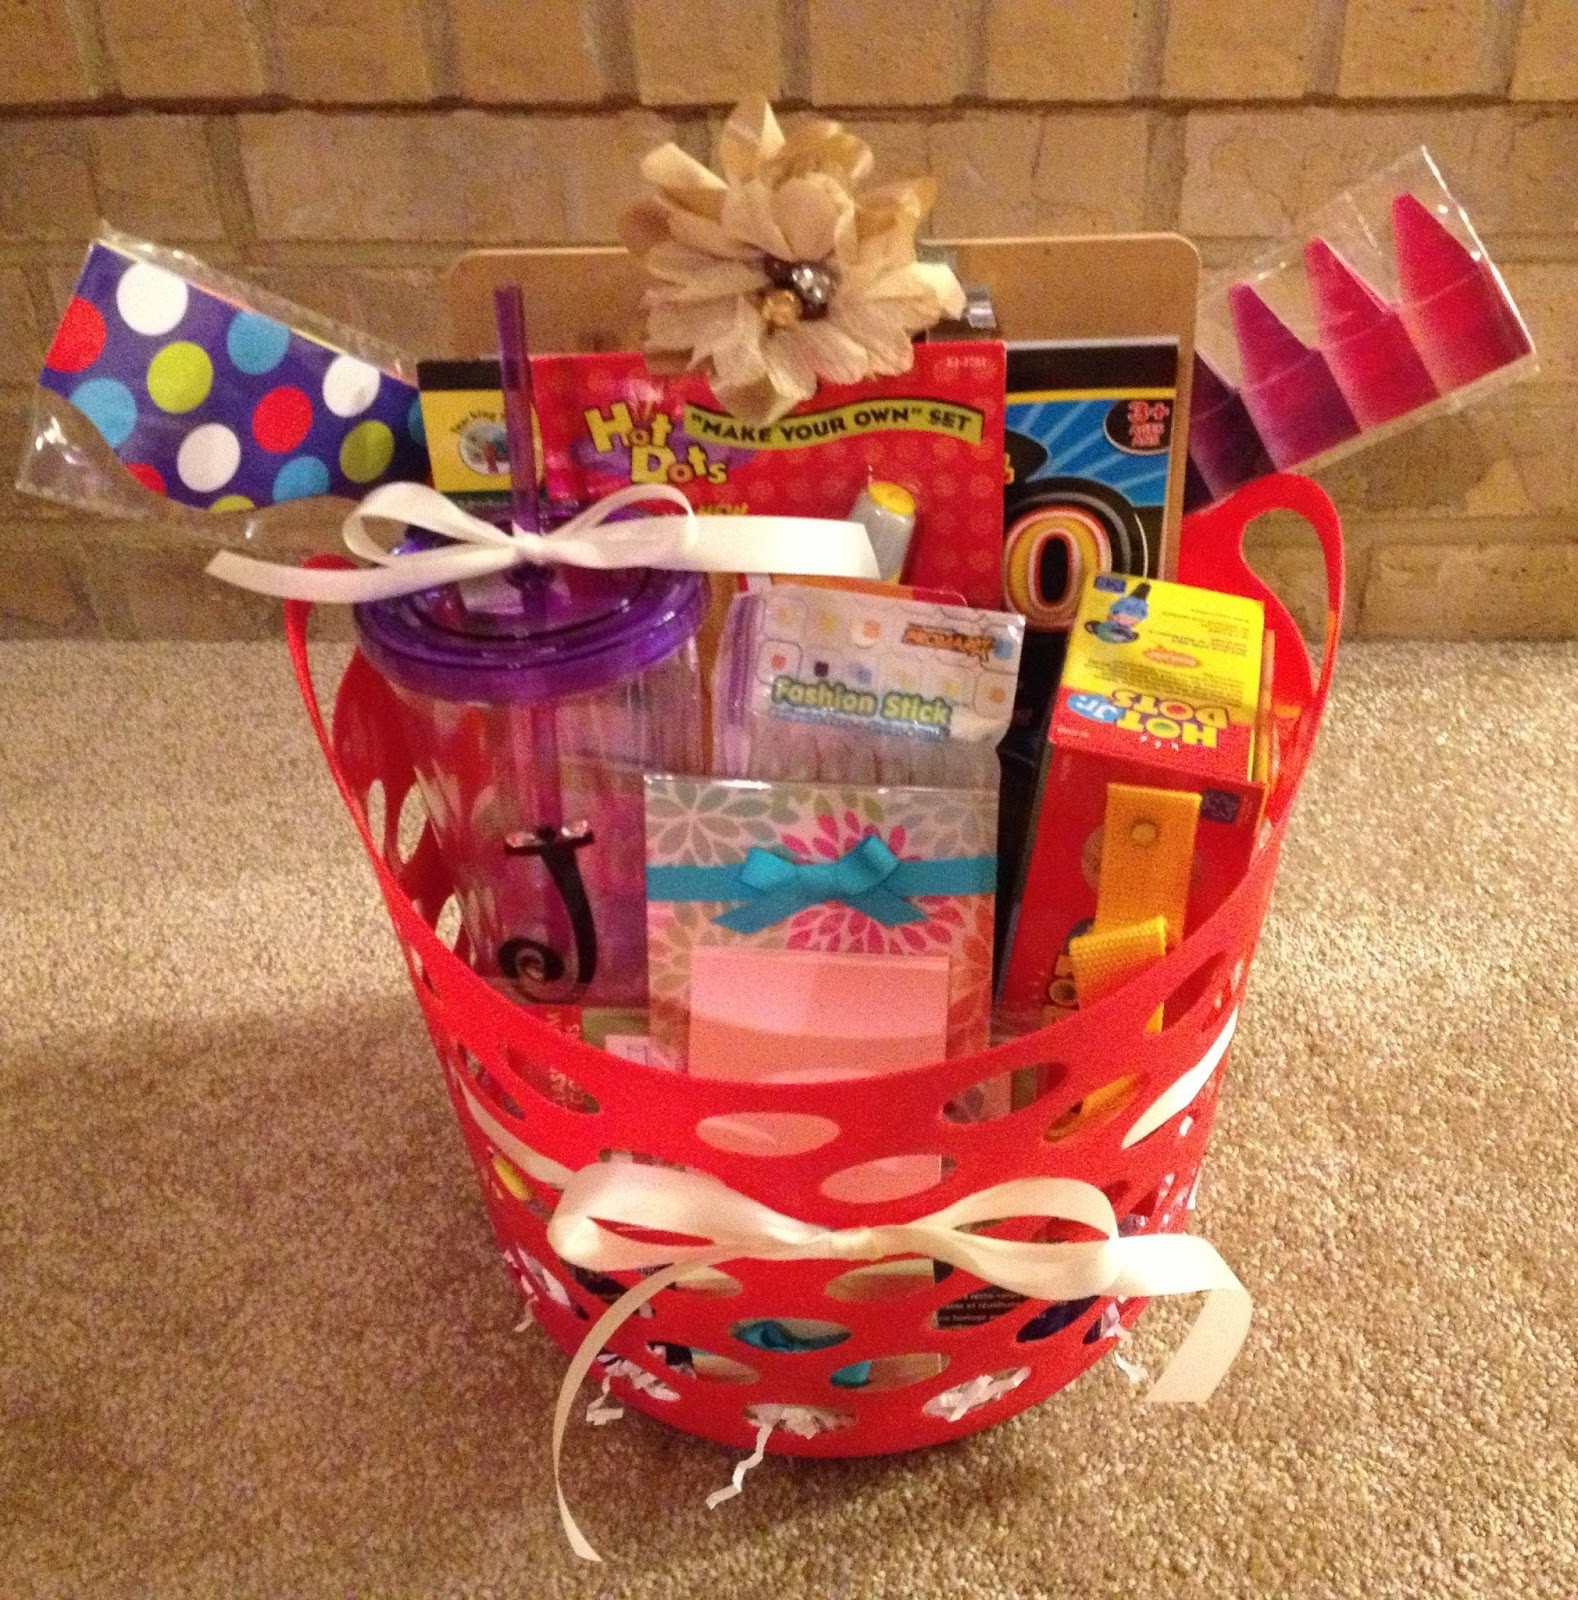 New Teacher Gift Basket Ideas
 Sugar & Spice DIY Teacher Gift Basket